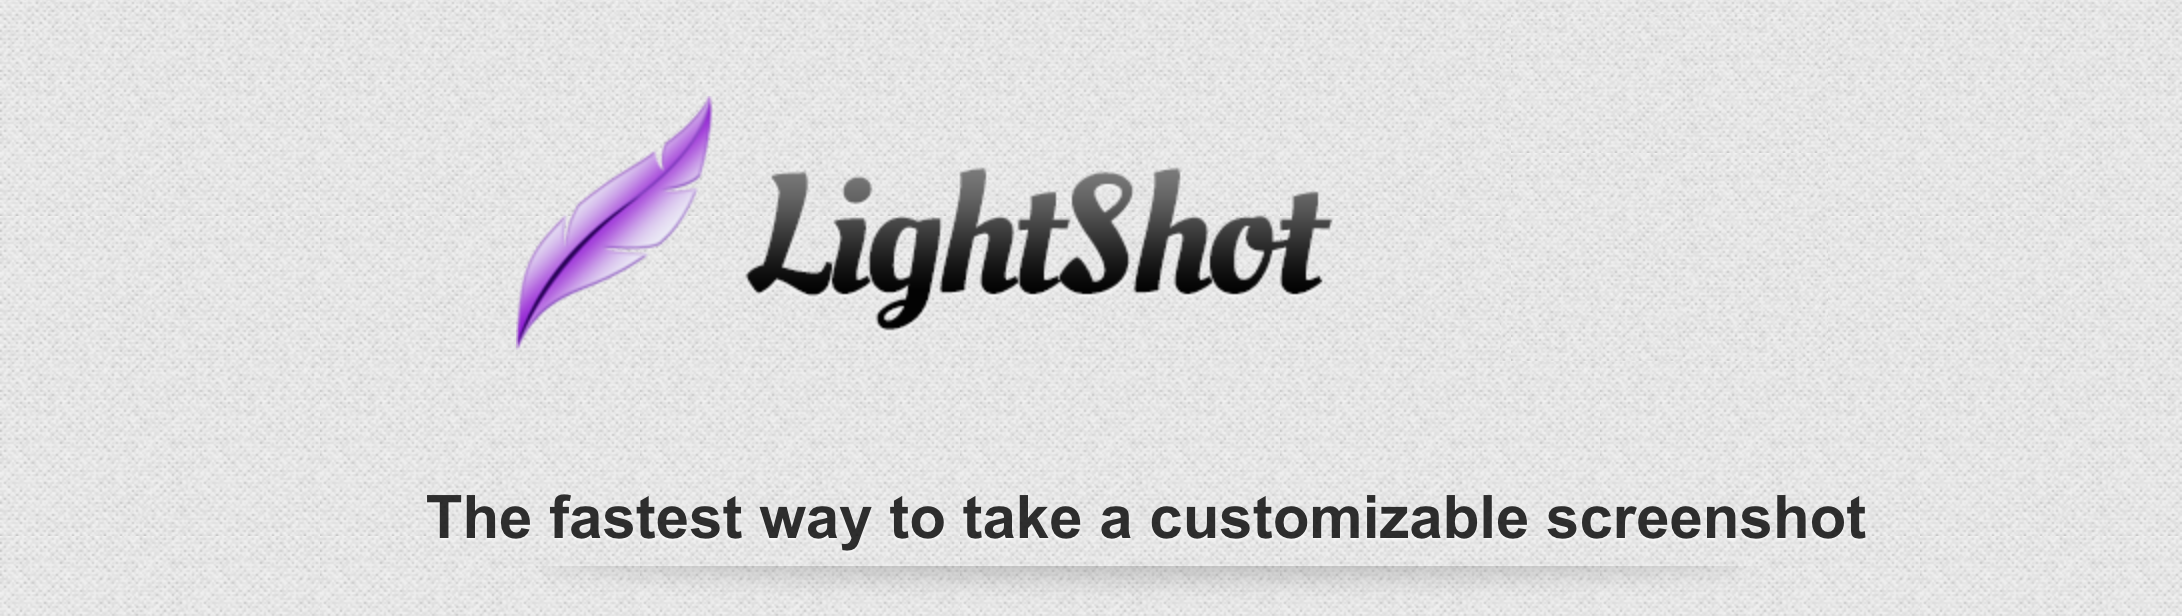 Sweft https a9fm github io lightshot. Lightshot. Lightshot логотип. Lightshot ярлык. Программа Lightshot.